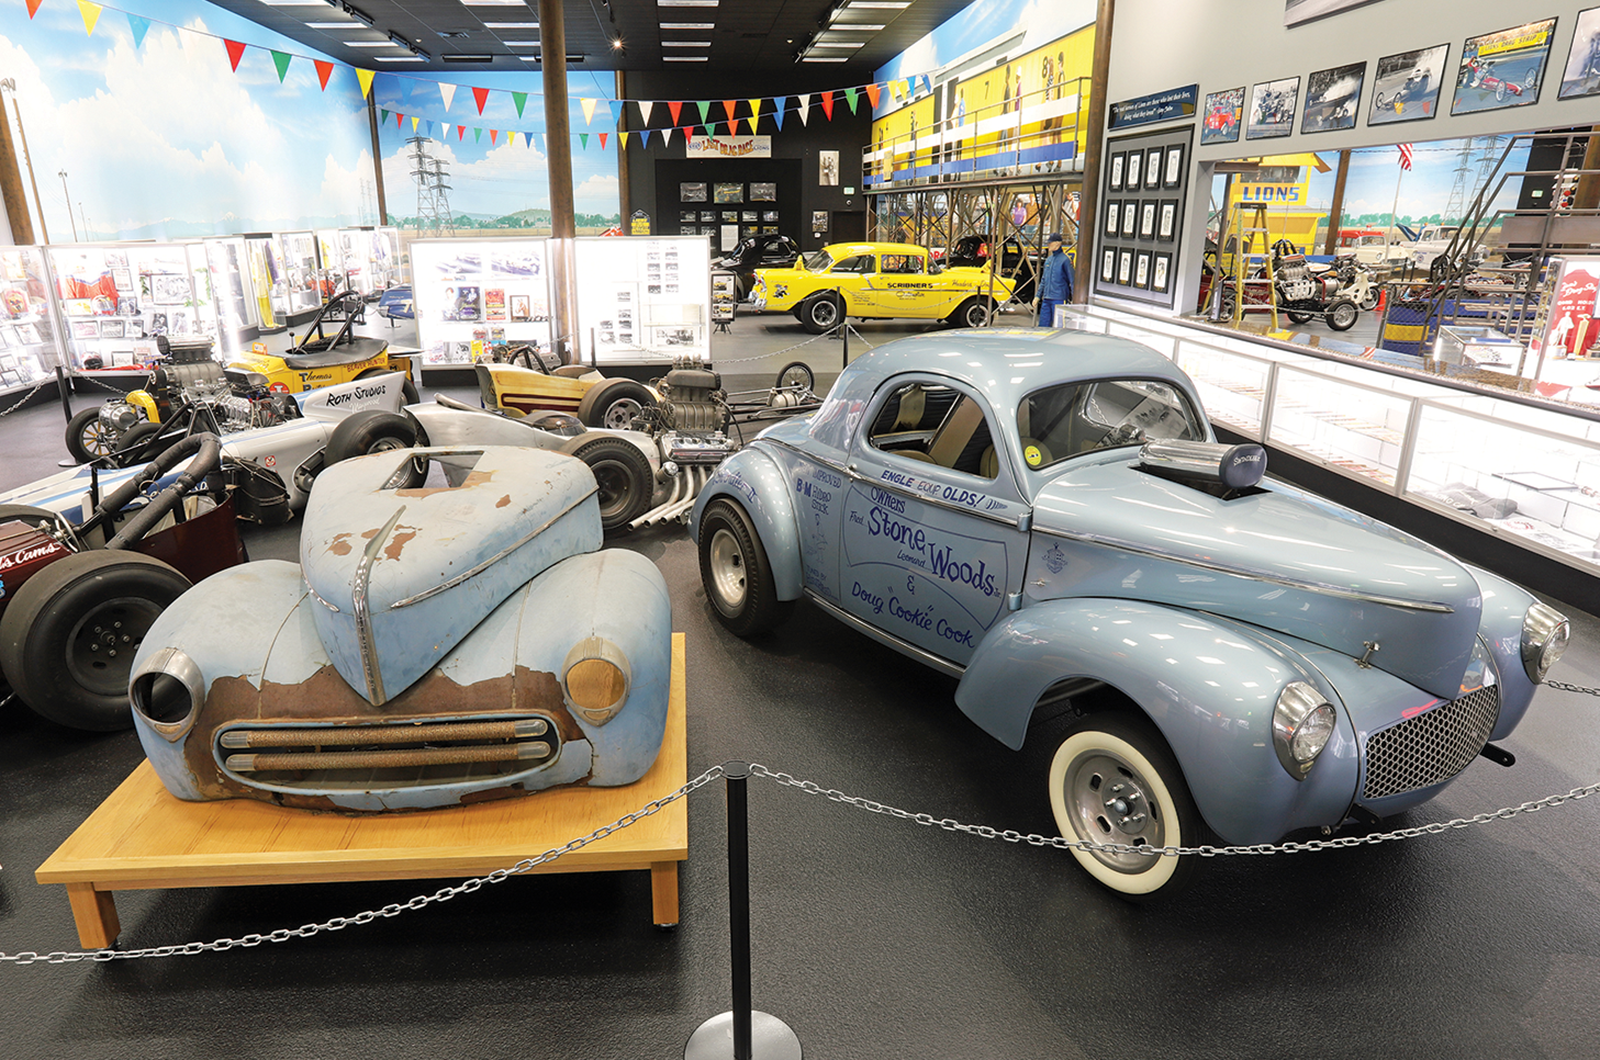 Classic & Sports Car - Classic shrine: Lions Drag Strip Museum